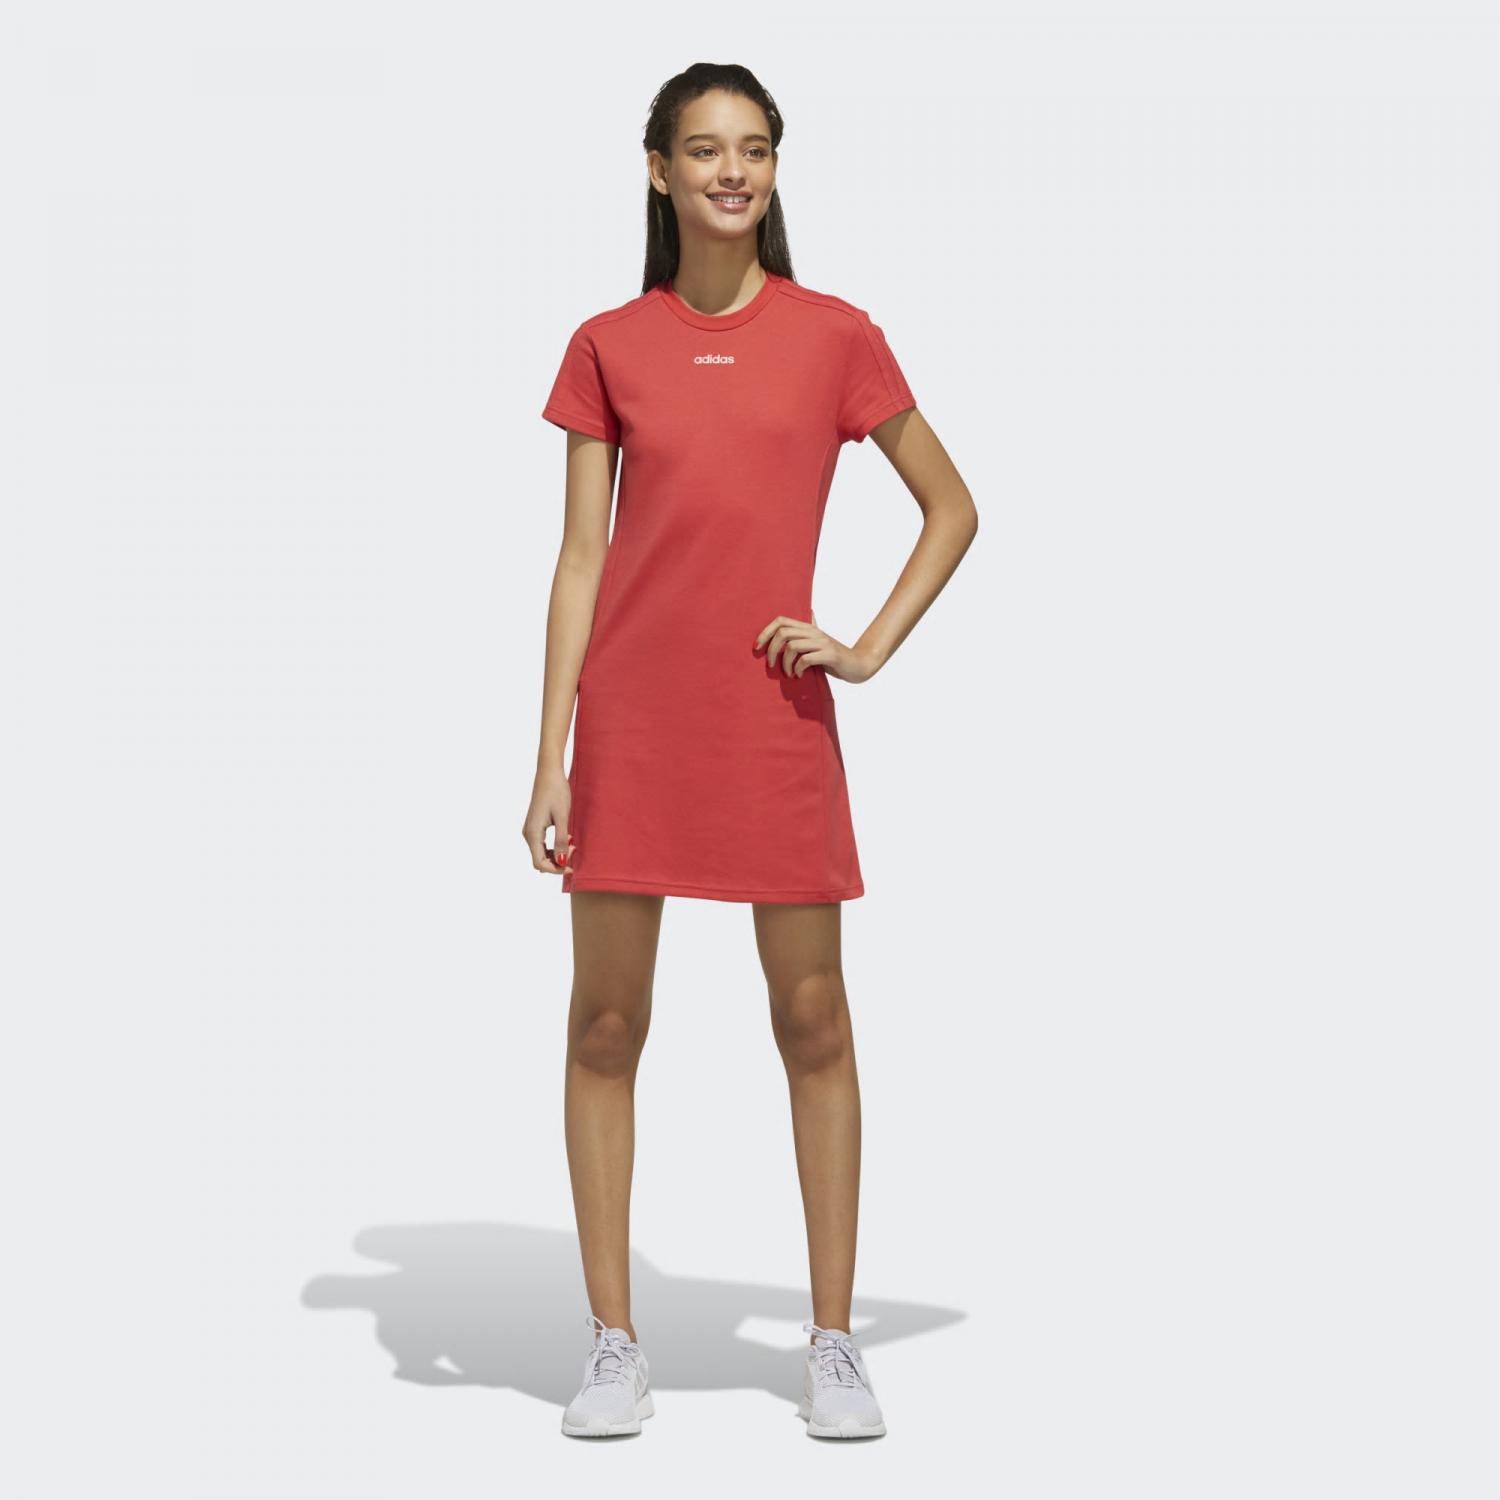 Womens Culture Pack Dress Red | Adidas Dresses & Skirts > Voglia Di Natura